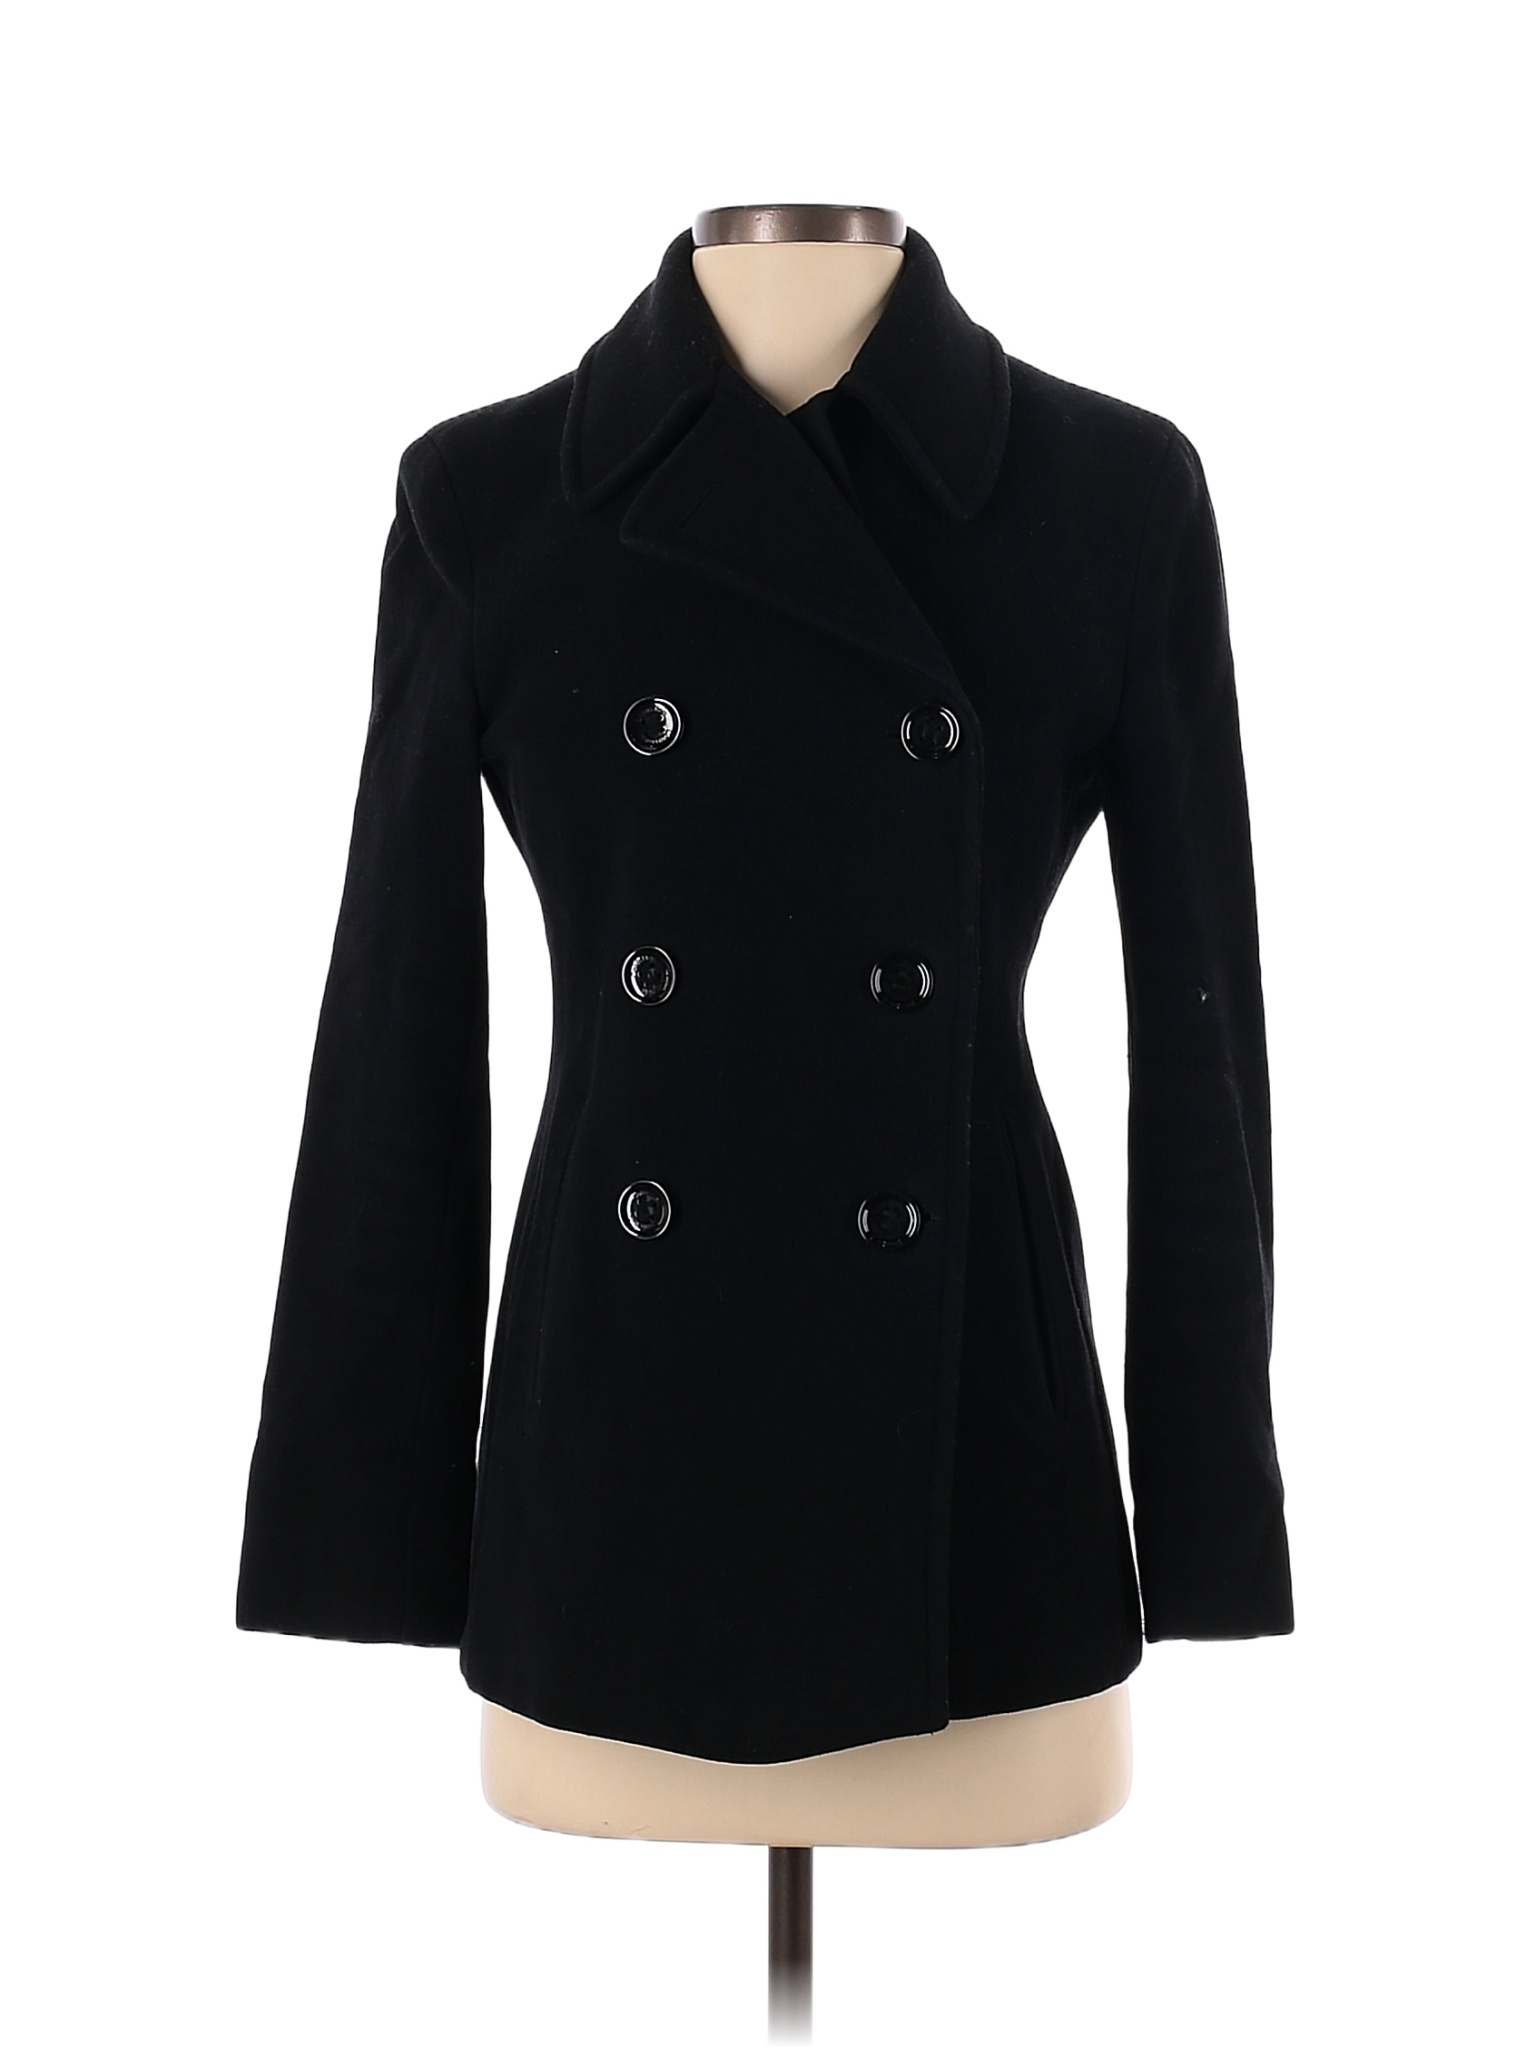 Calvin Klein Solid Black Wool Coat Size 2 (Petite) - 73% off | thredUP